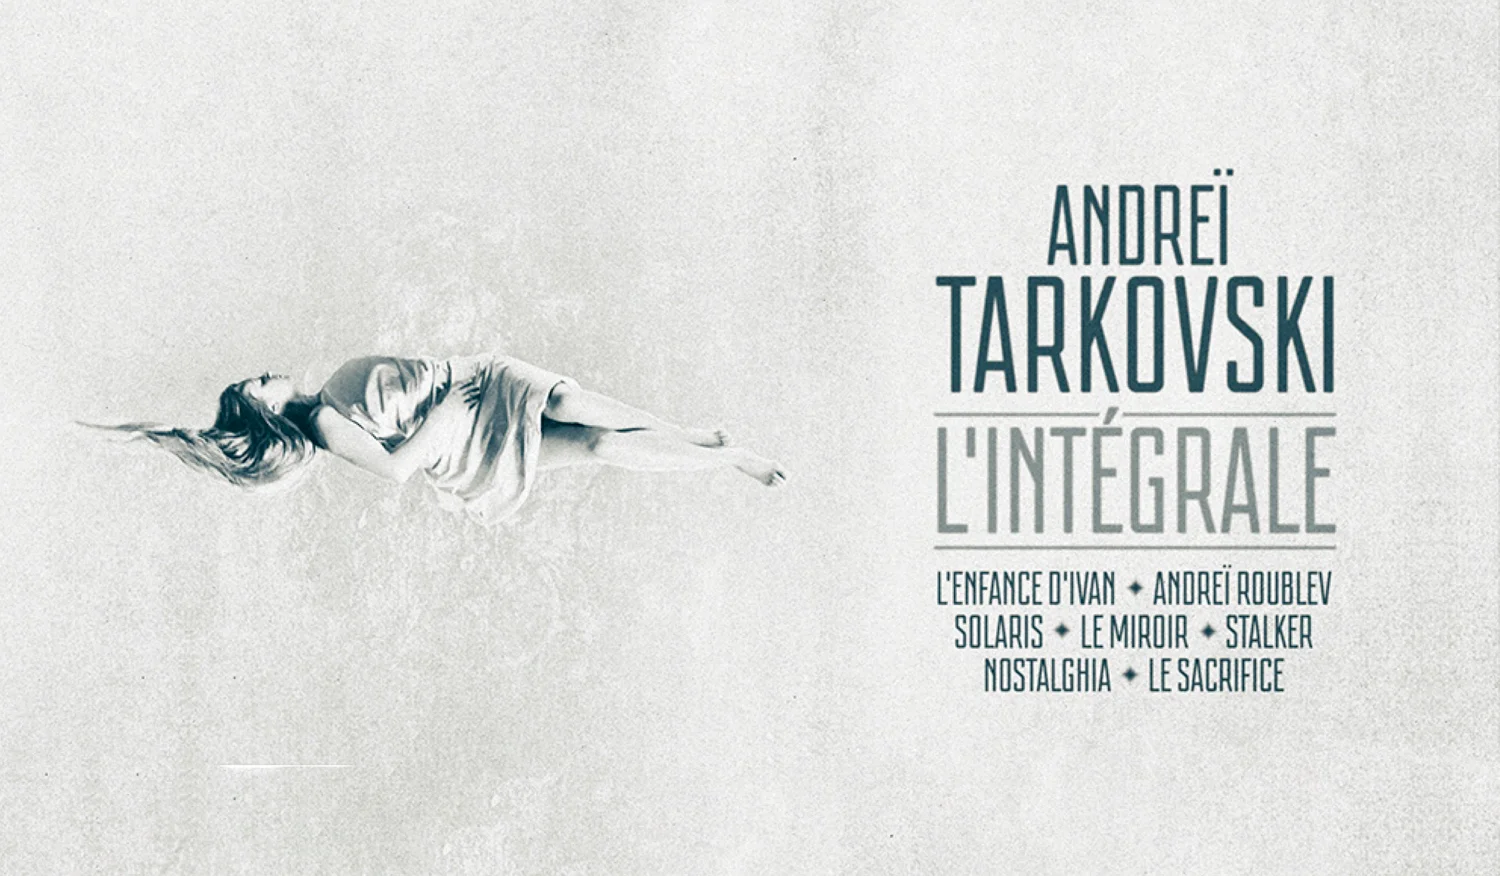 ANDREÏ TARKOVSKI, L'INTÉGRALE - bande-annonce (trailer) on Vimeo